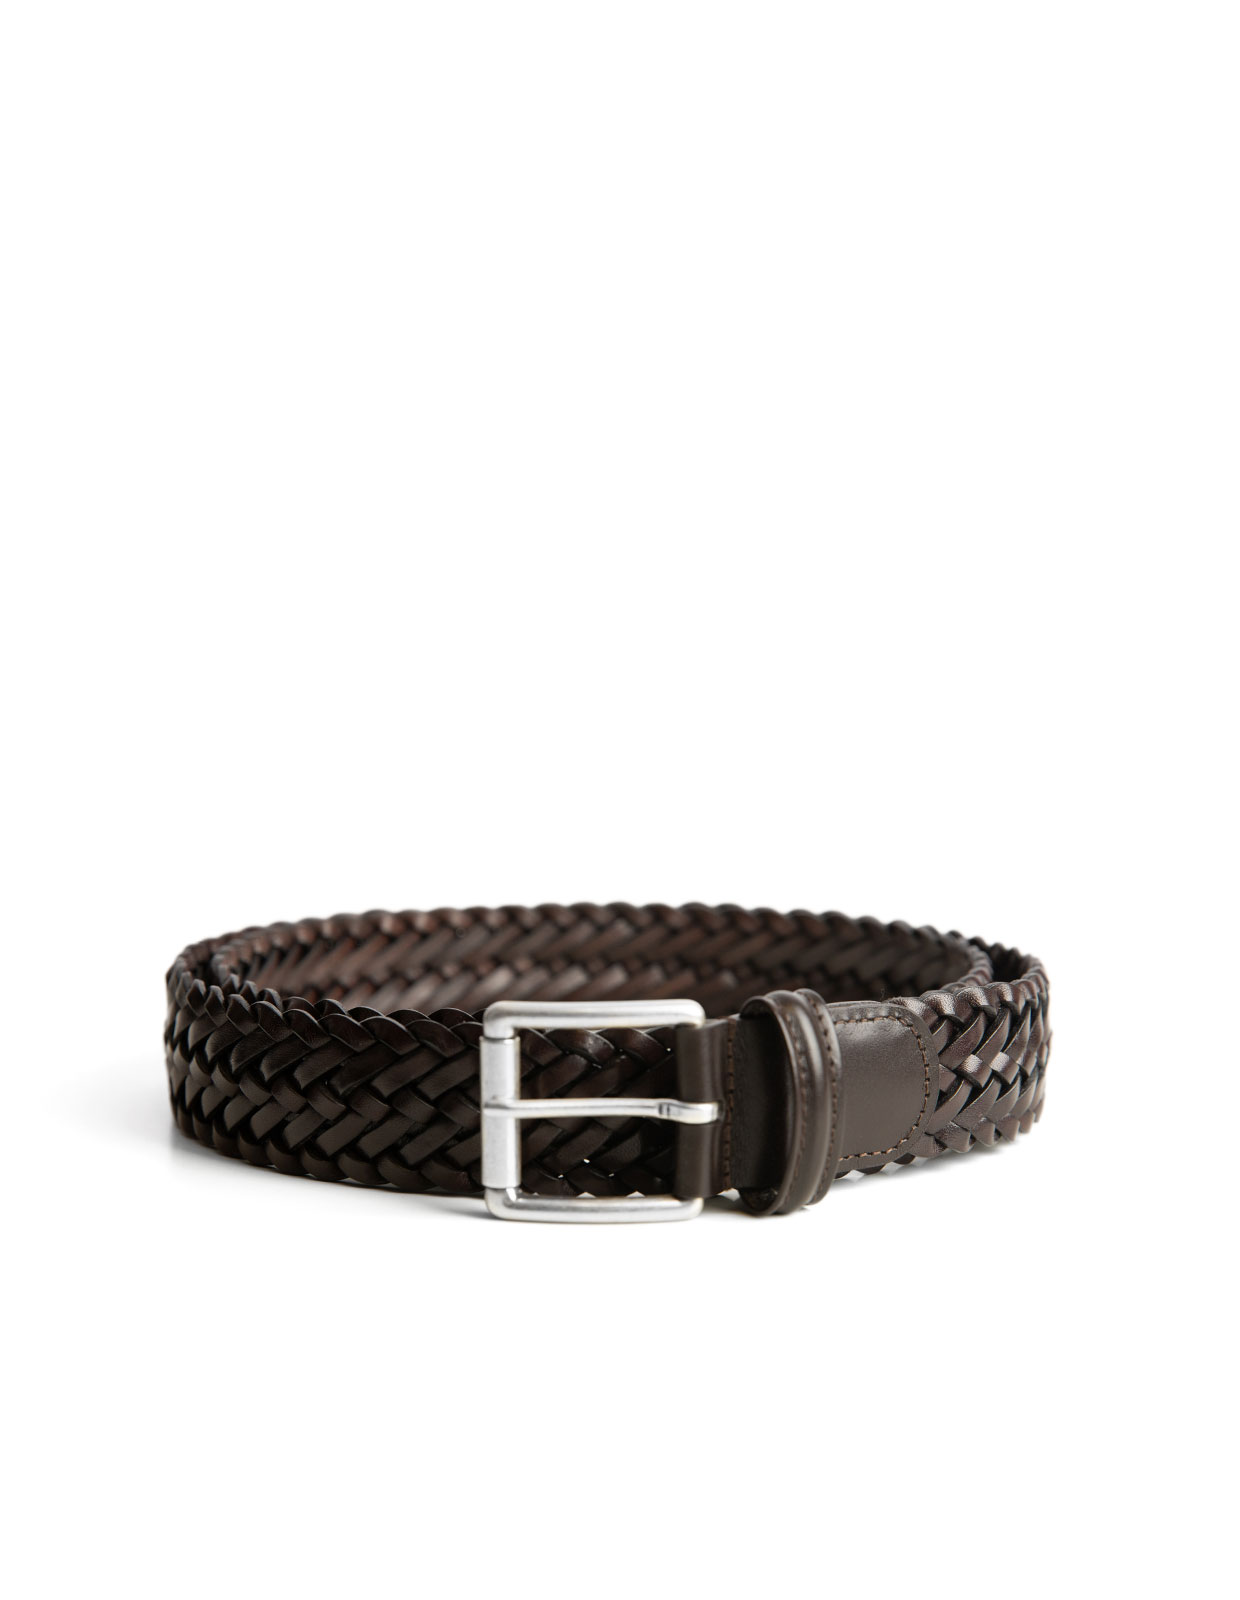 Braided Leather Belt Brown Stl 115